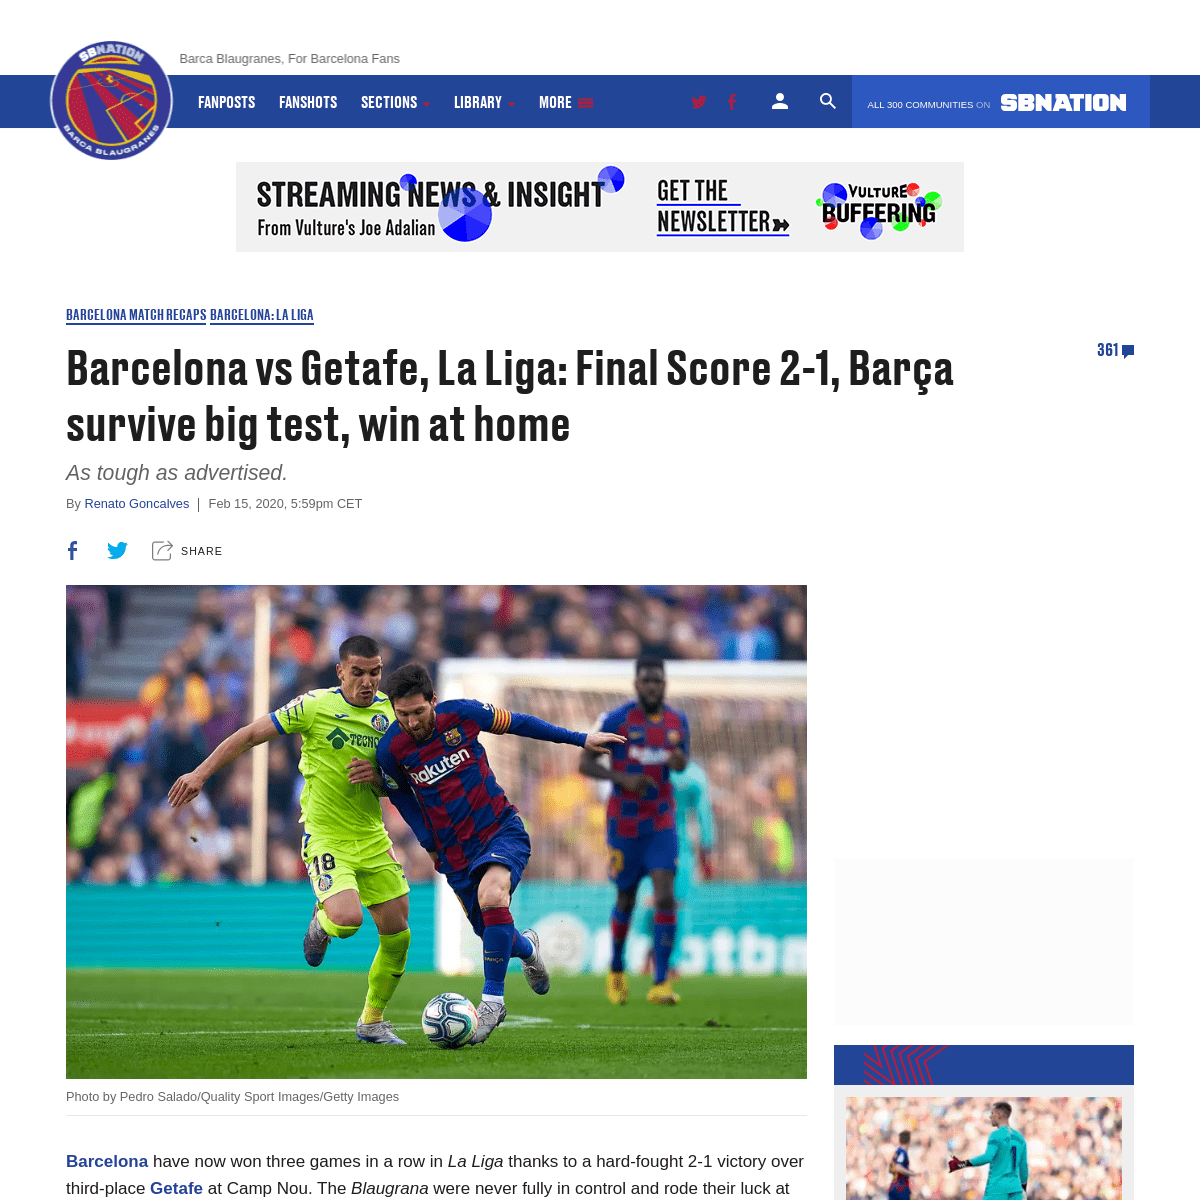 A complete backup of www.barcablaugranes.com/2020/2/15/21138844/barcelona-getafe-la-liga-final-score-match-report-recap-reaction